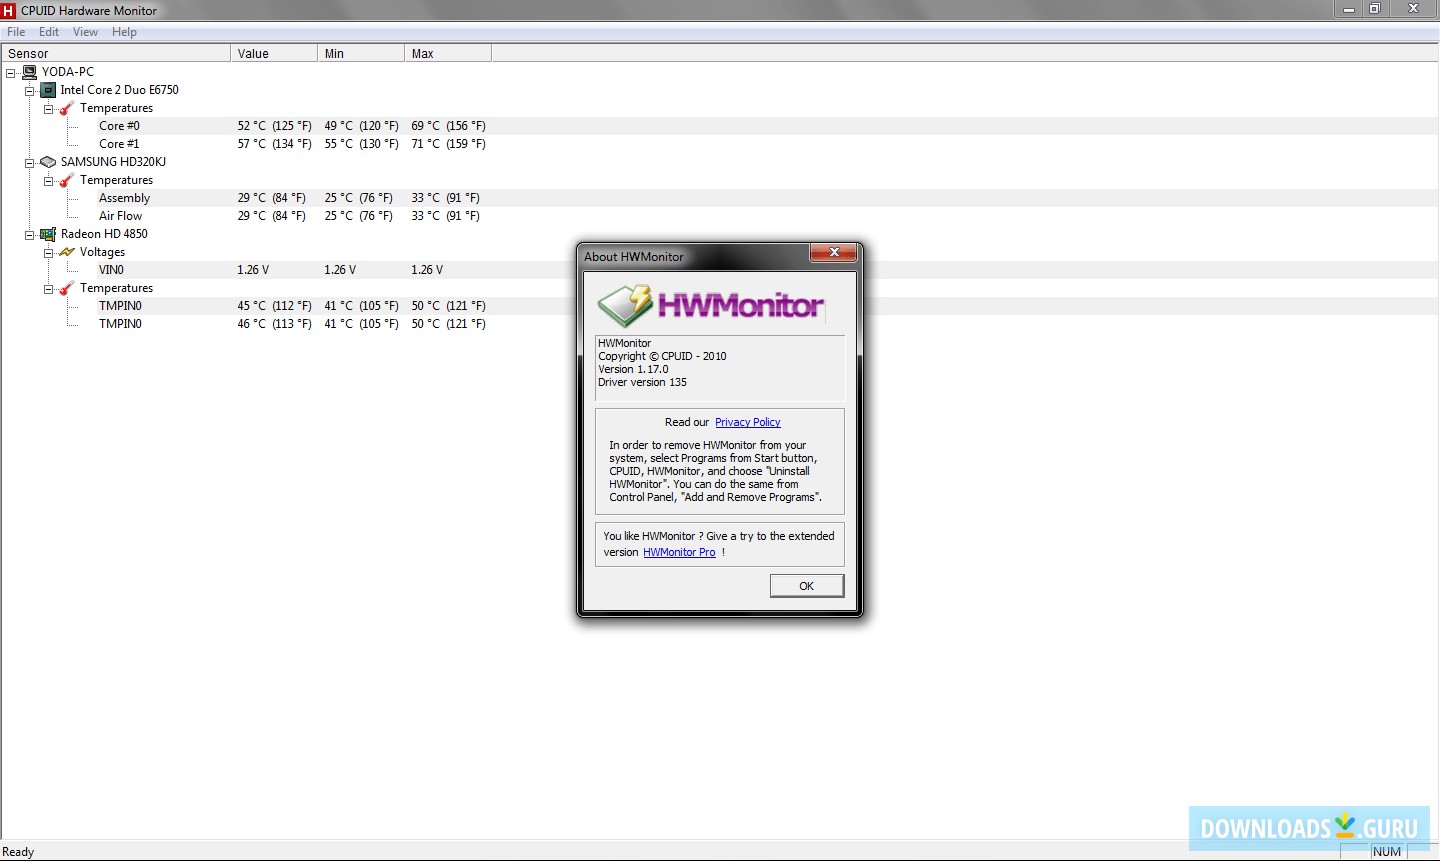 instal the last version for windows HWMonitor Pro 1.53